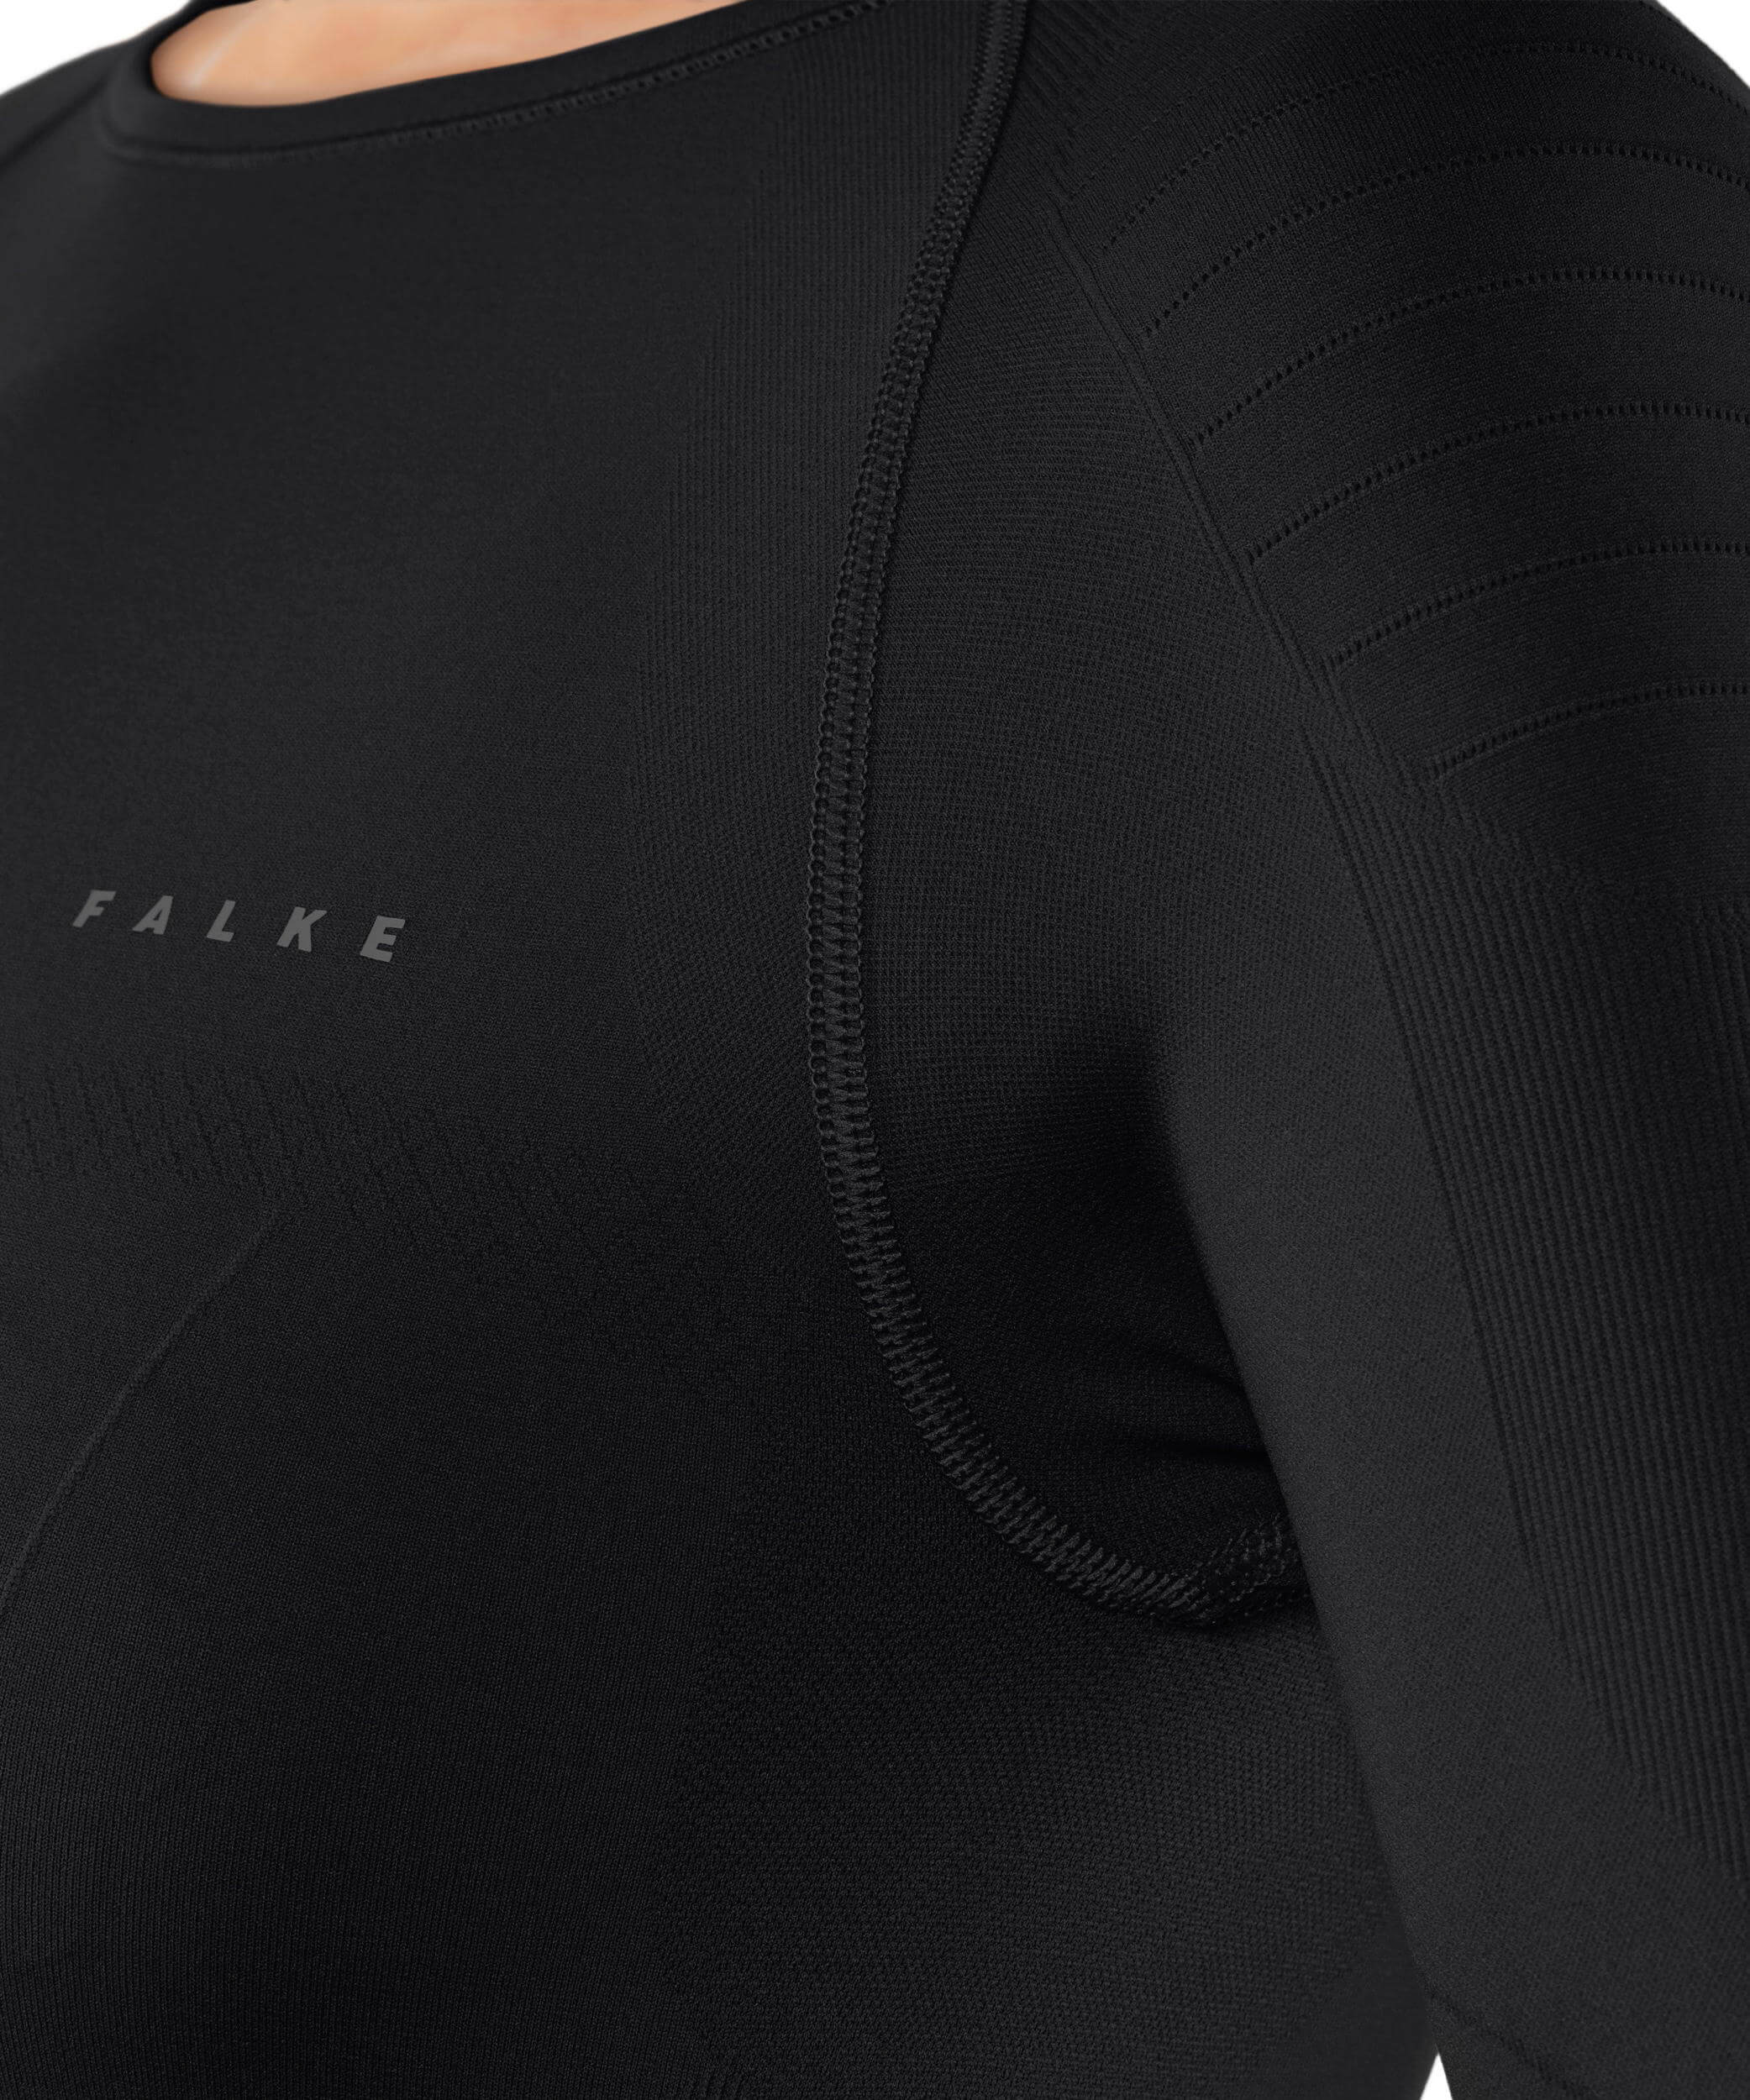 Falke Warm Longsleeved Shirt, black